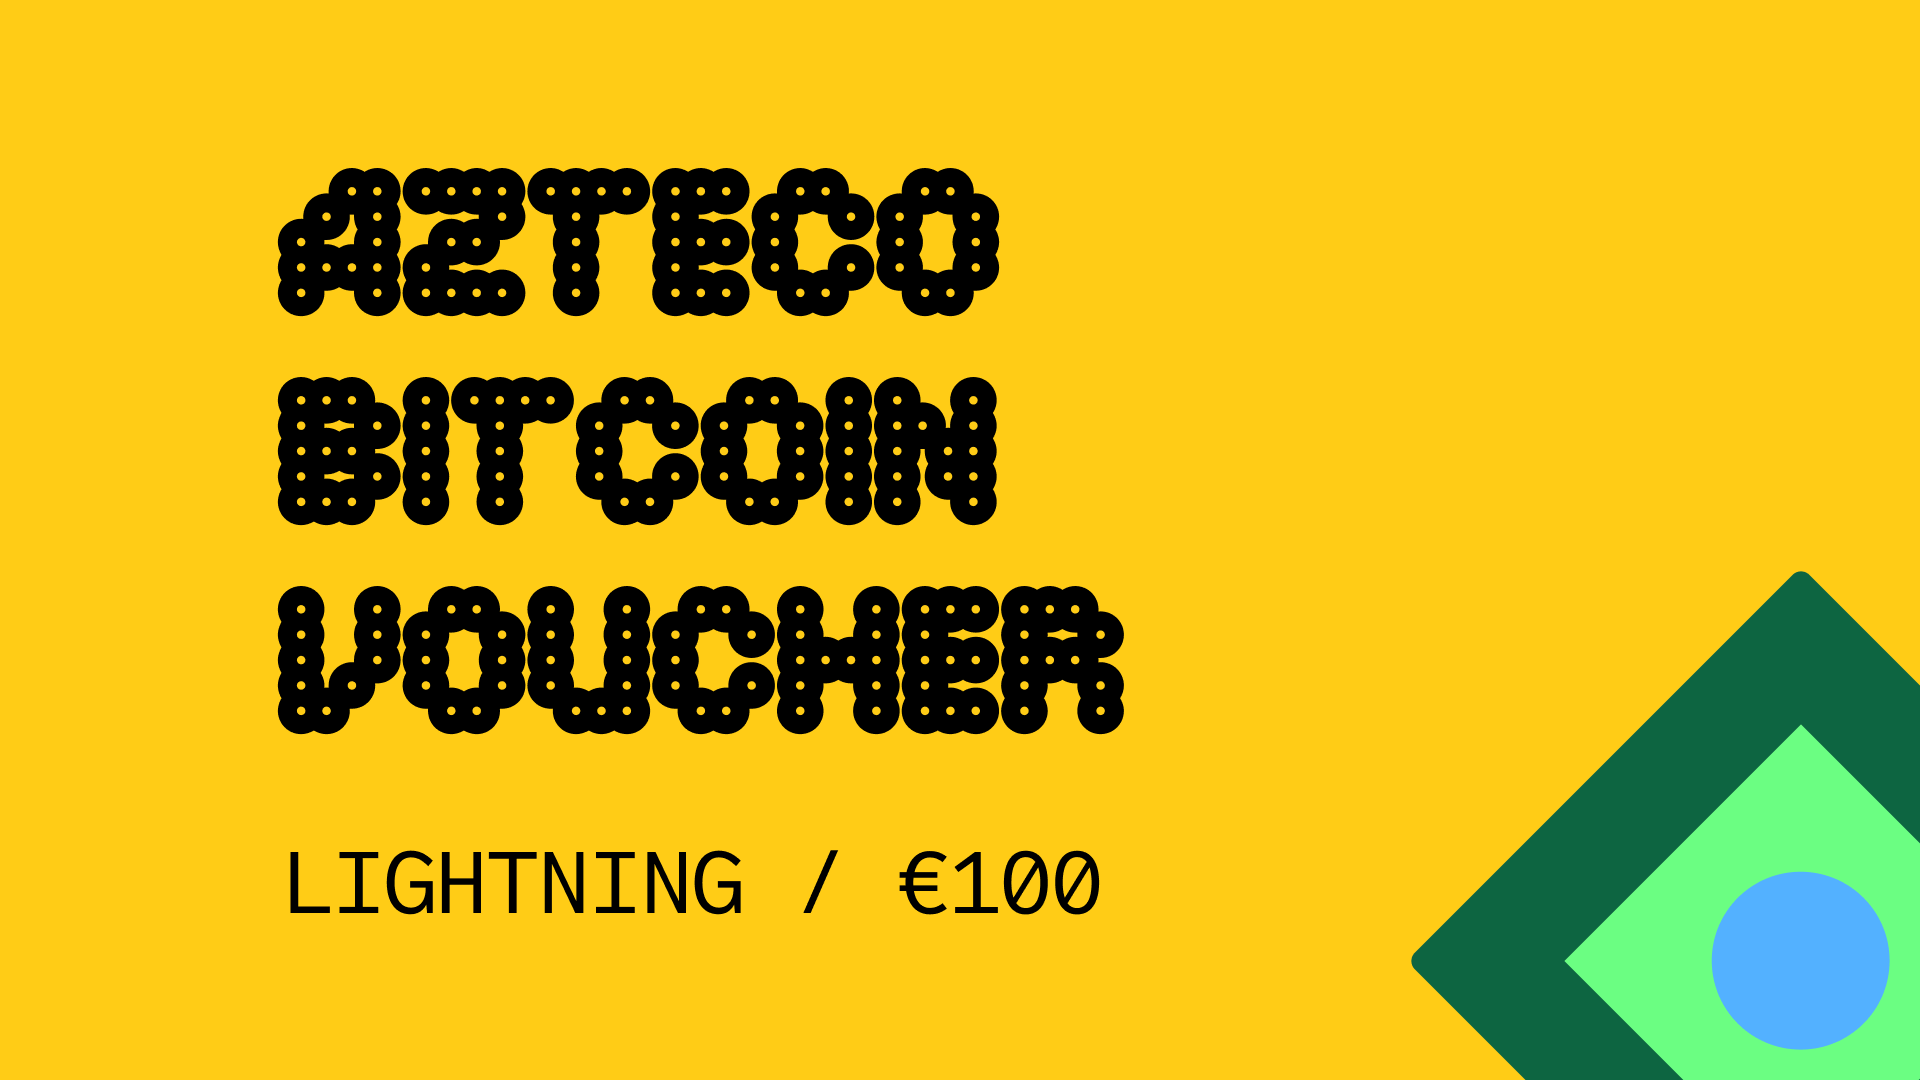 Azteco Bitcoin Lighting €100 Voucher 112.98 usd